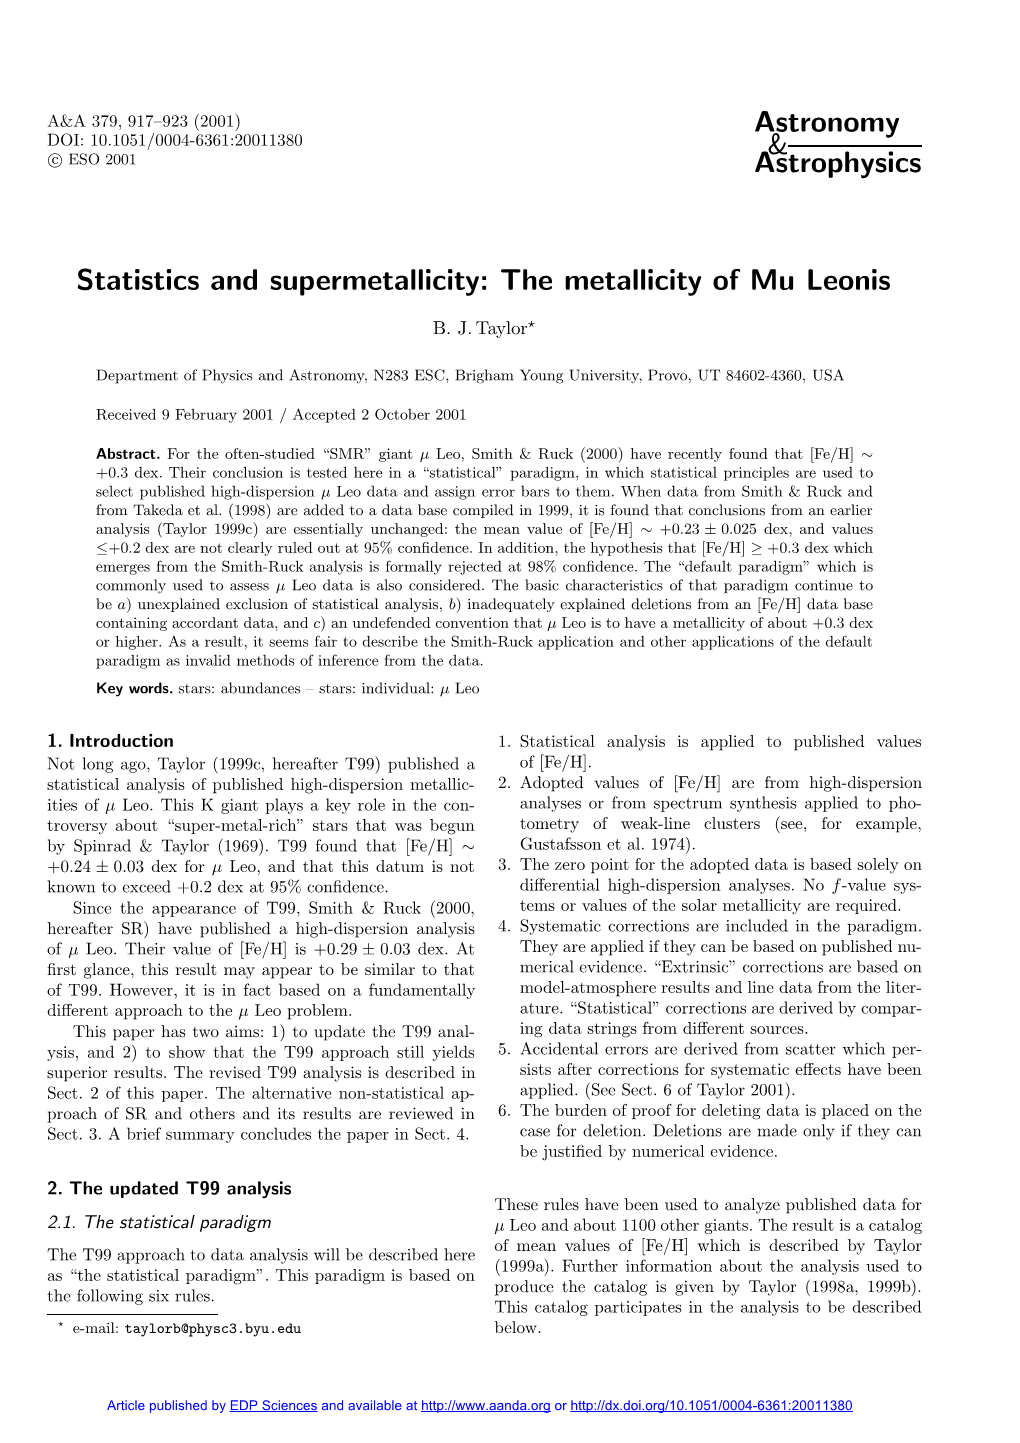 Statistics and Supermetallicity: the Metallicity of Mu Leonis